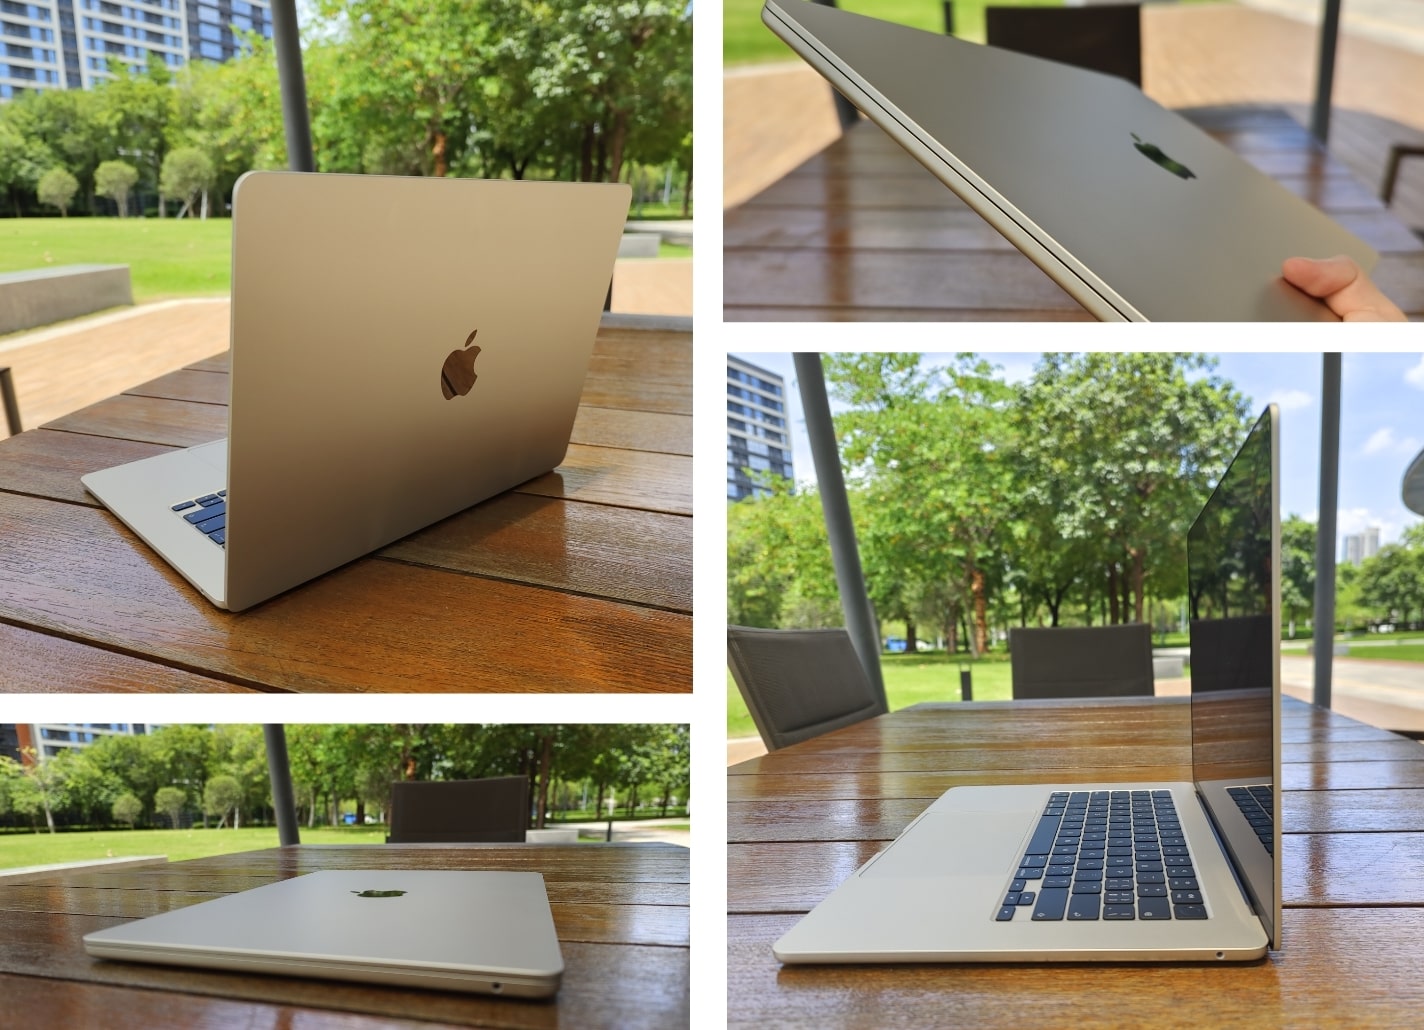 MacBook Air 星光色在室外自然光照下的展现。